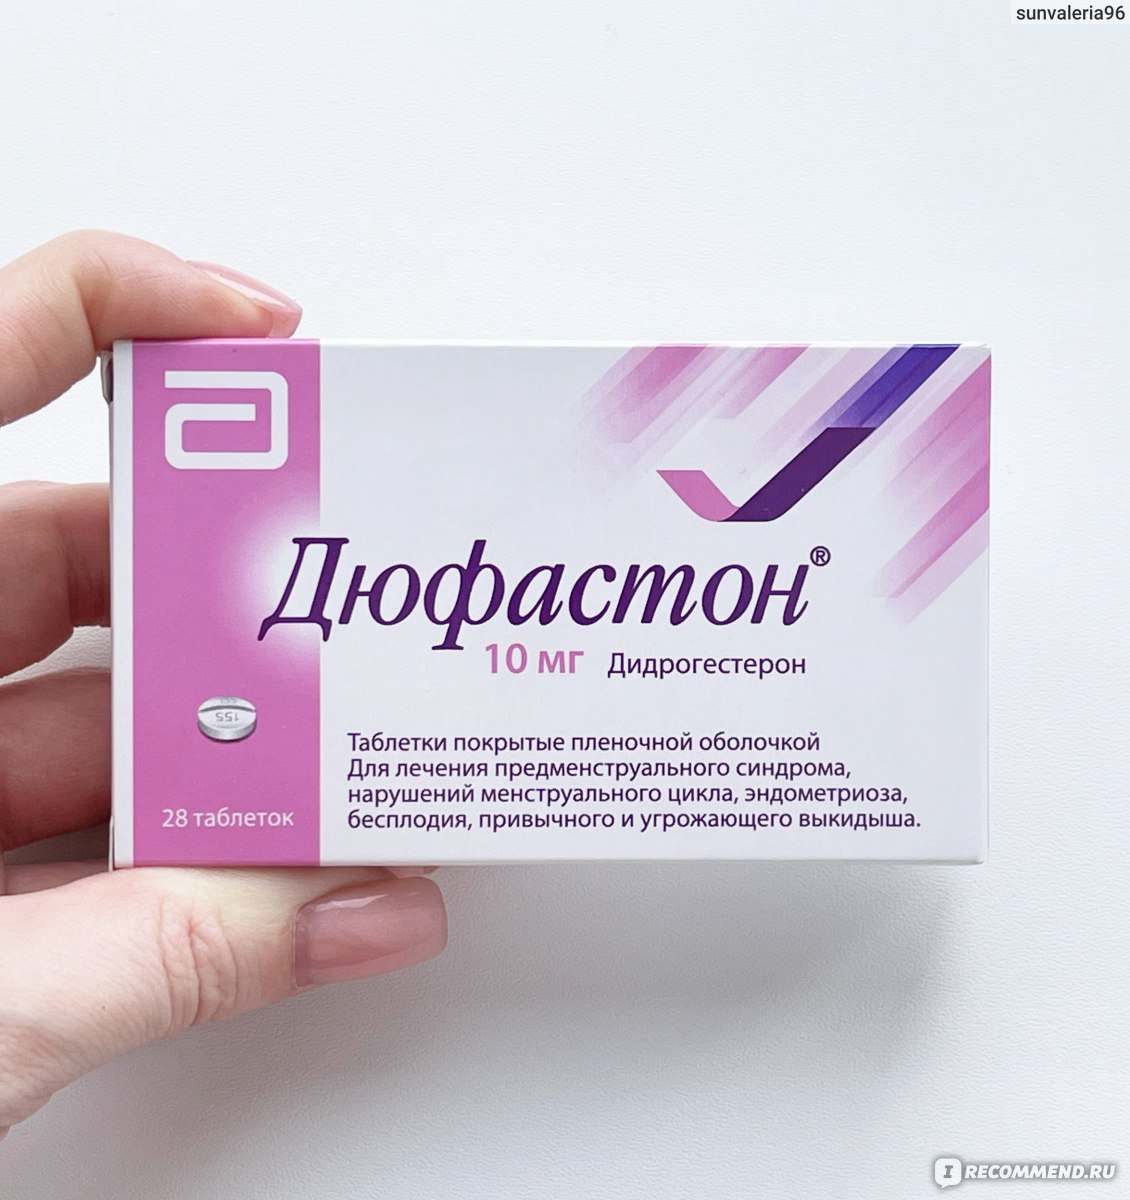 Гормональные препараты Solvay Pharma Дюфастон фото